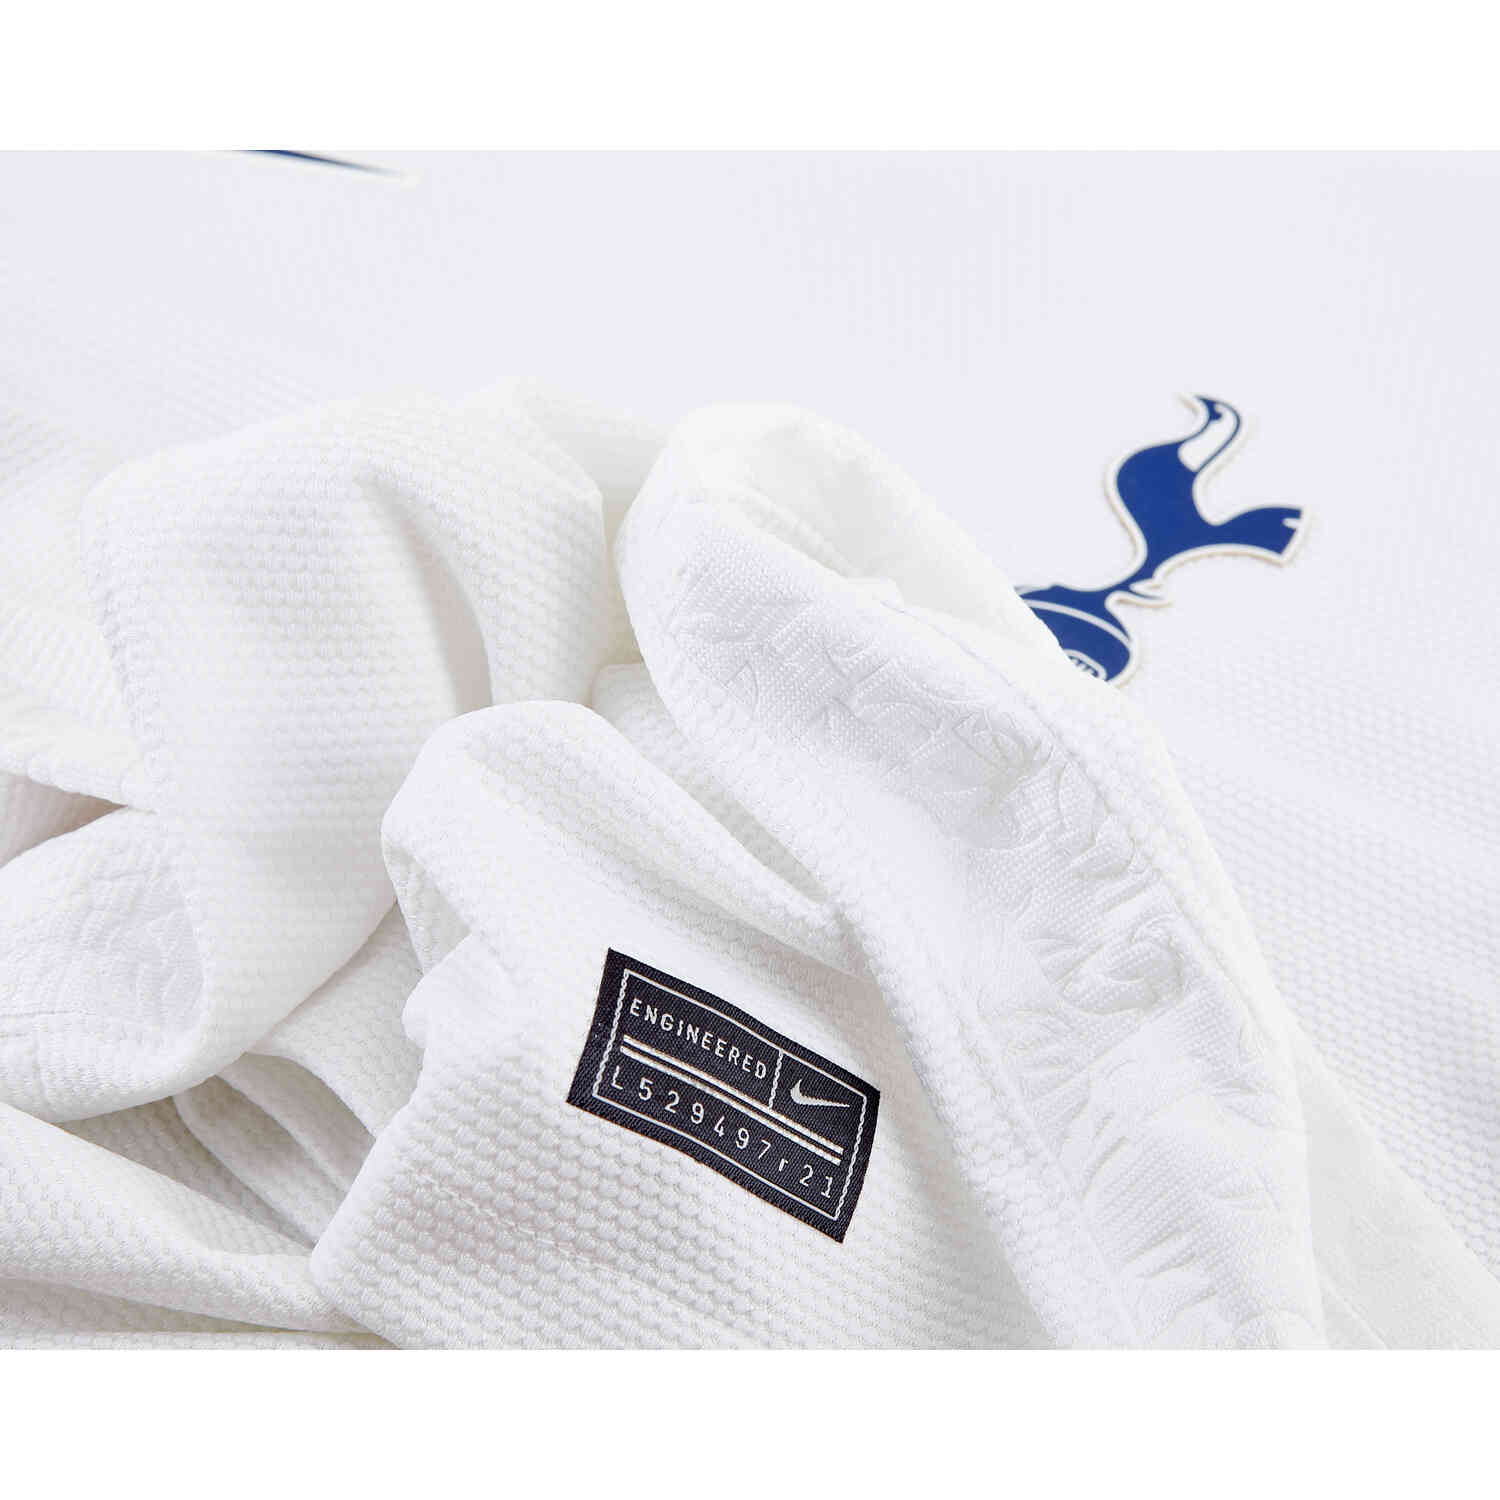 Nike Tottenham 21/22 Home Jersey